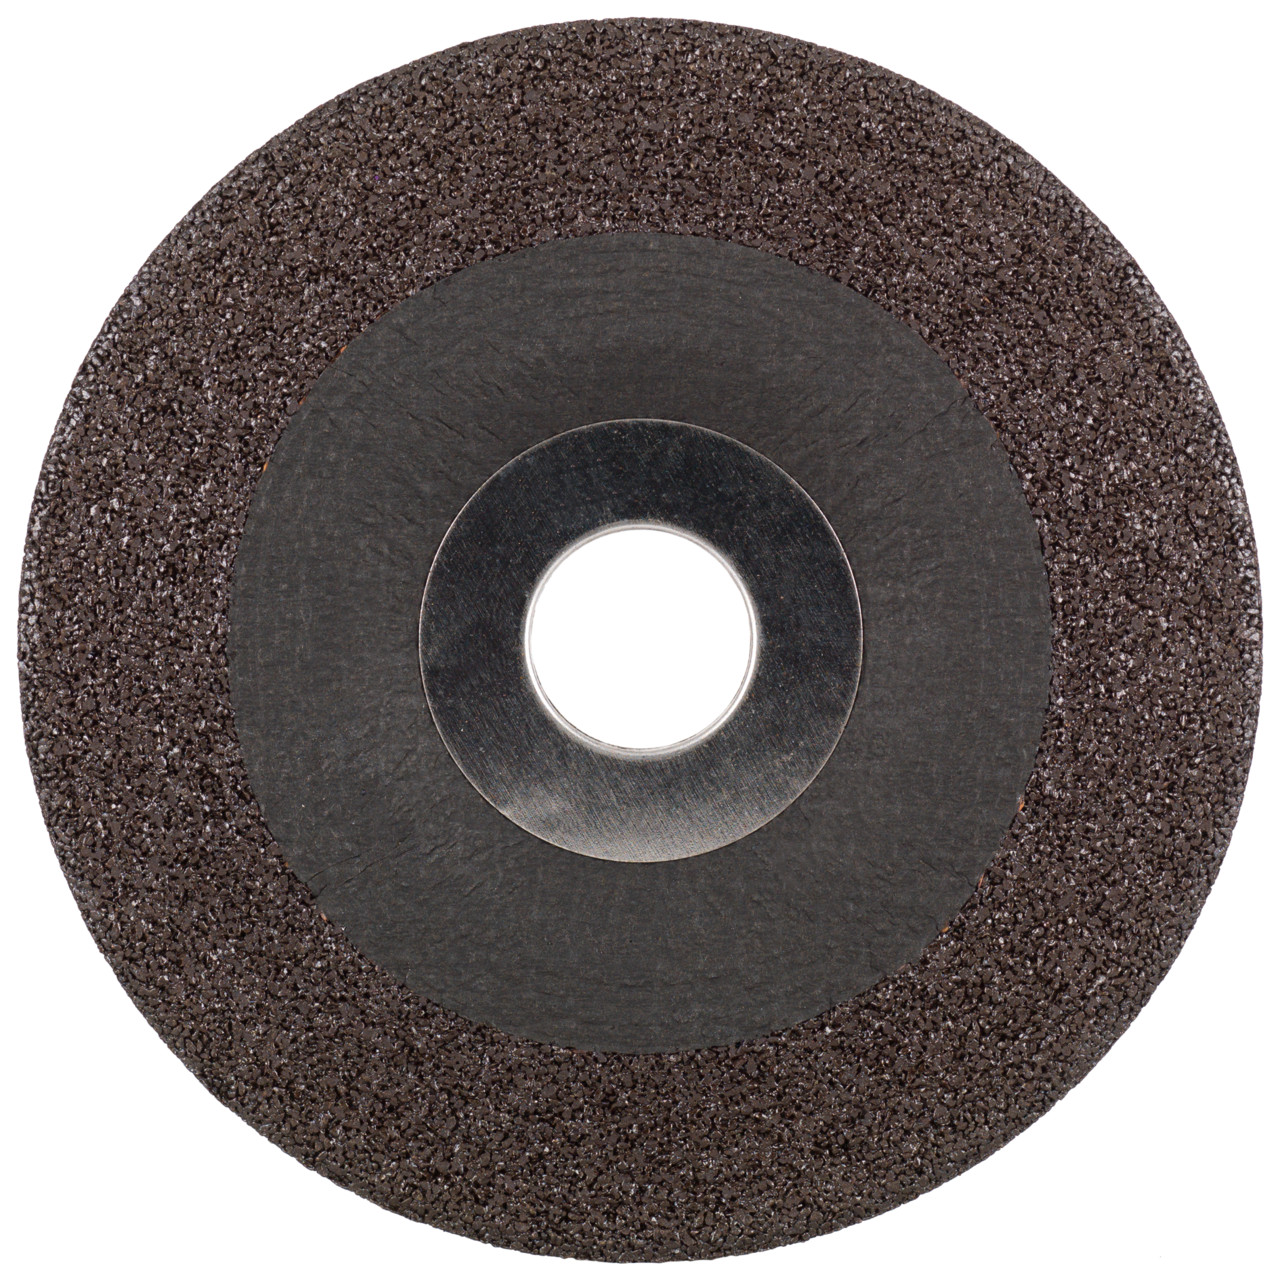 Tyrolit Rough grinding disc DxUxH 115x7x22.23 LONGLIFE Z-MAX for steel, shape: 27 - offset version, Art. 34353683